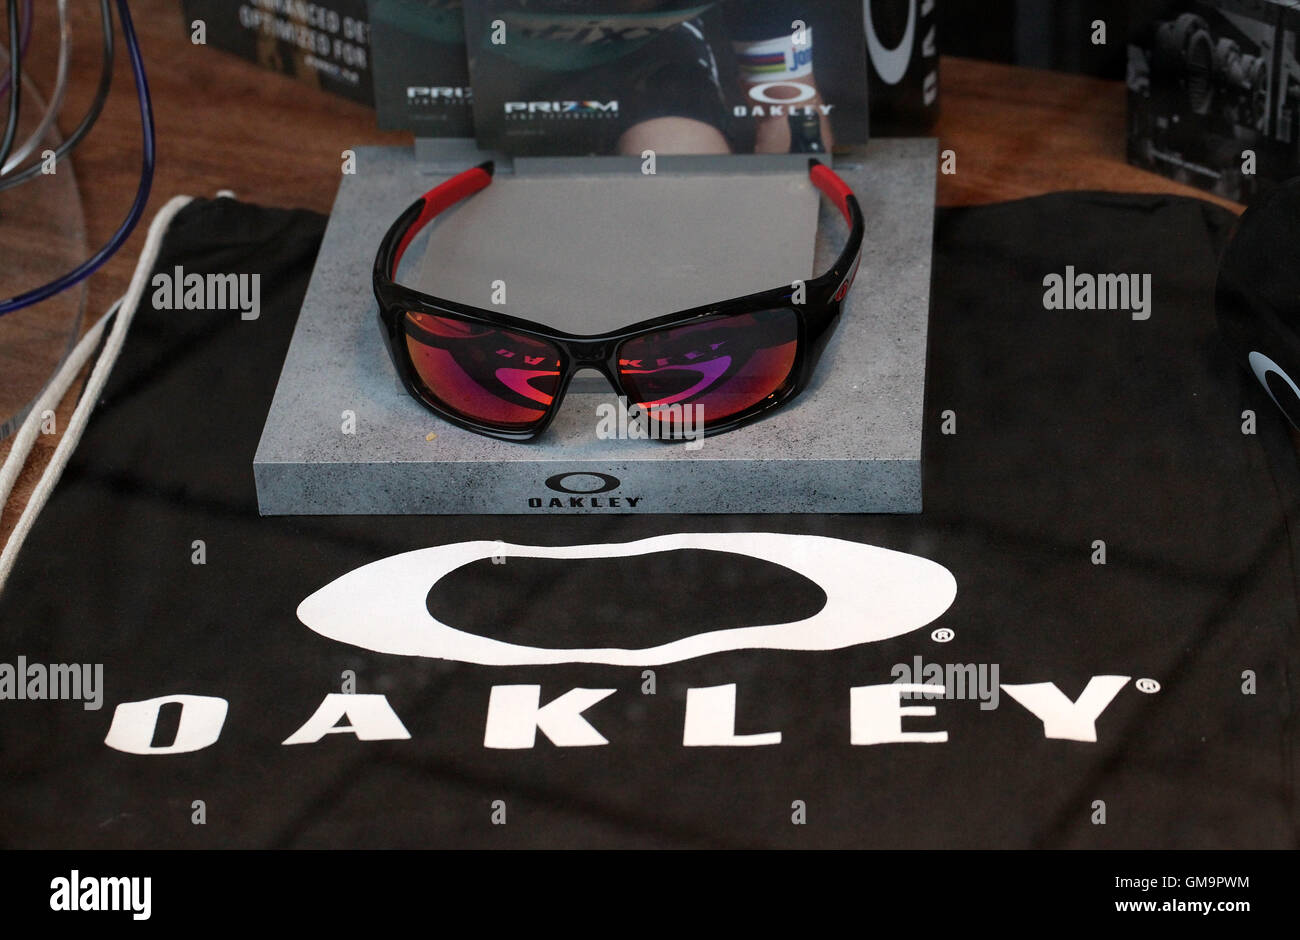 Top 61+ imagen oakley shades - Abzlocal.mx